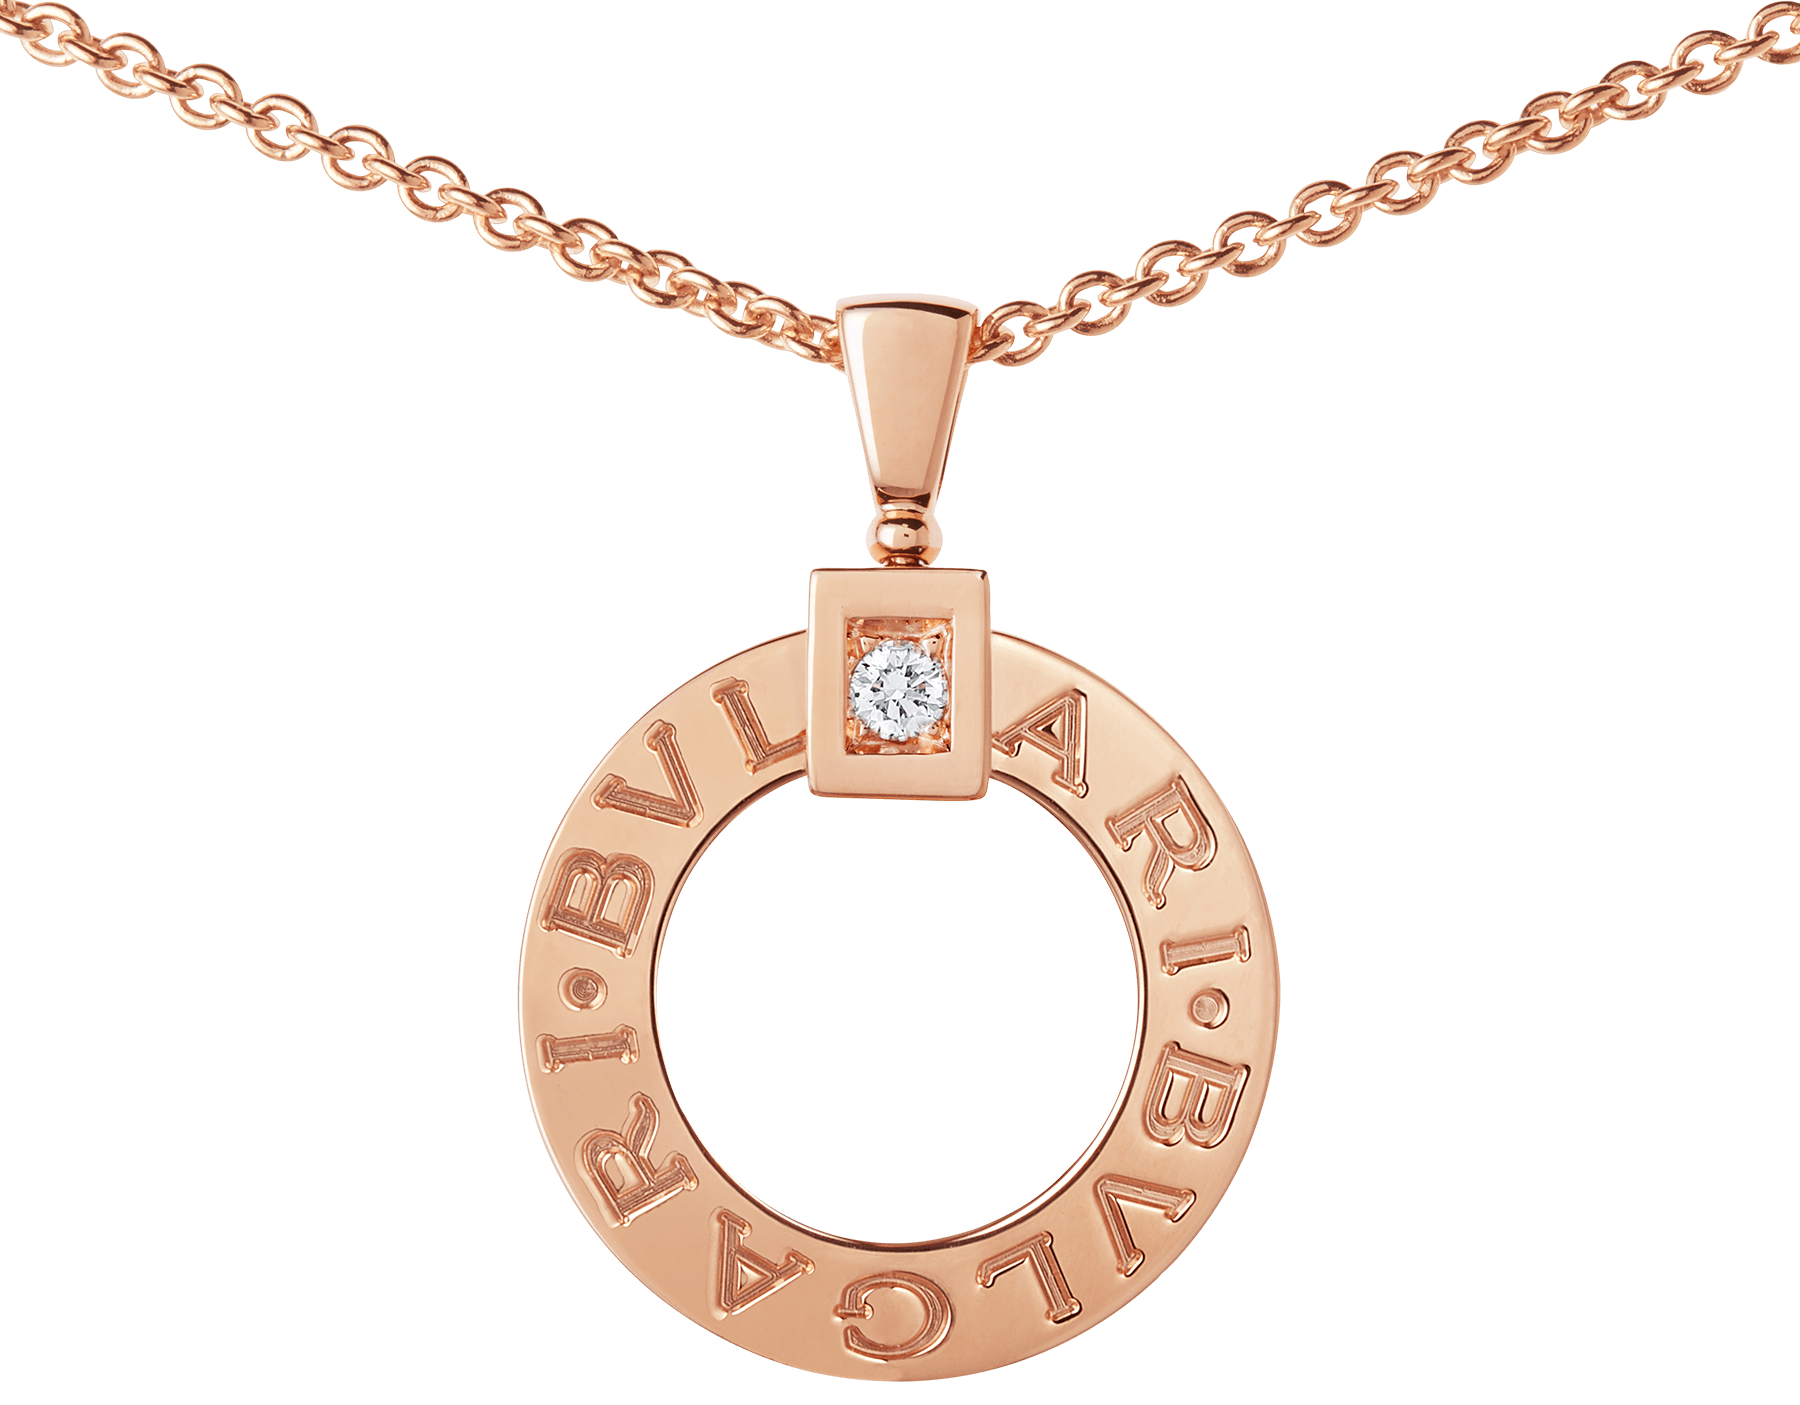 bvlgari rose gold pendant